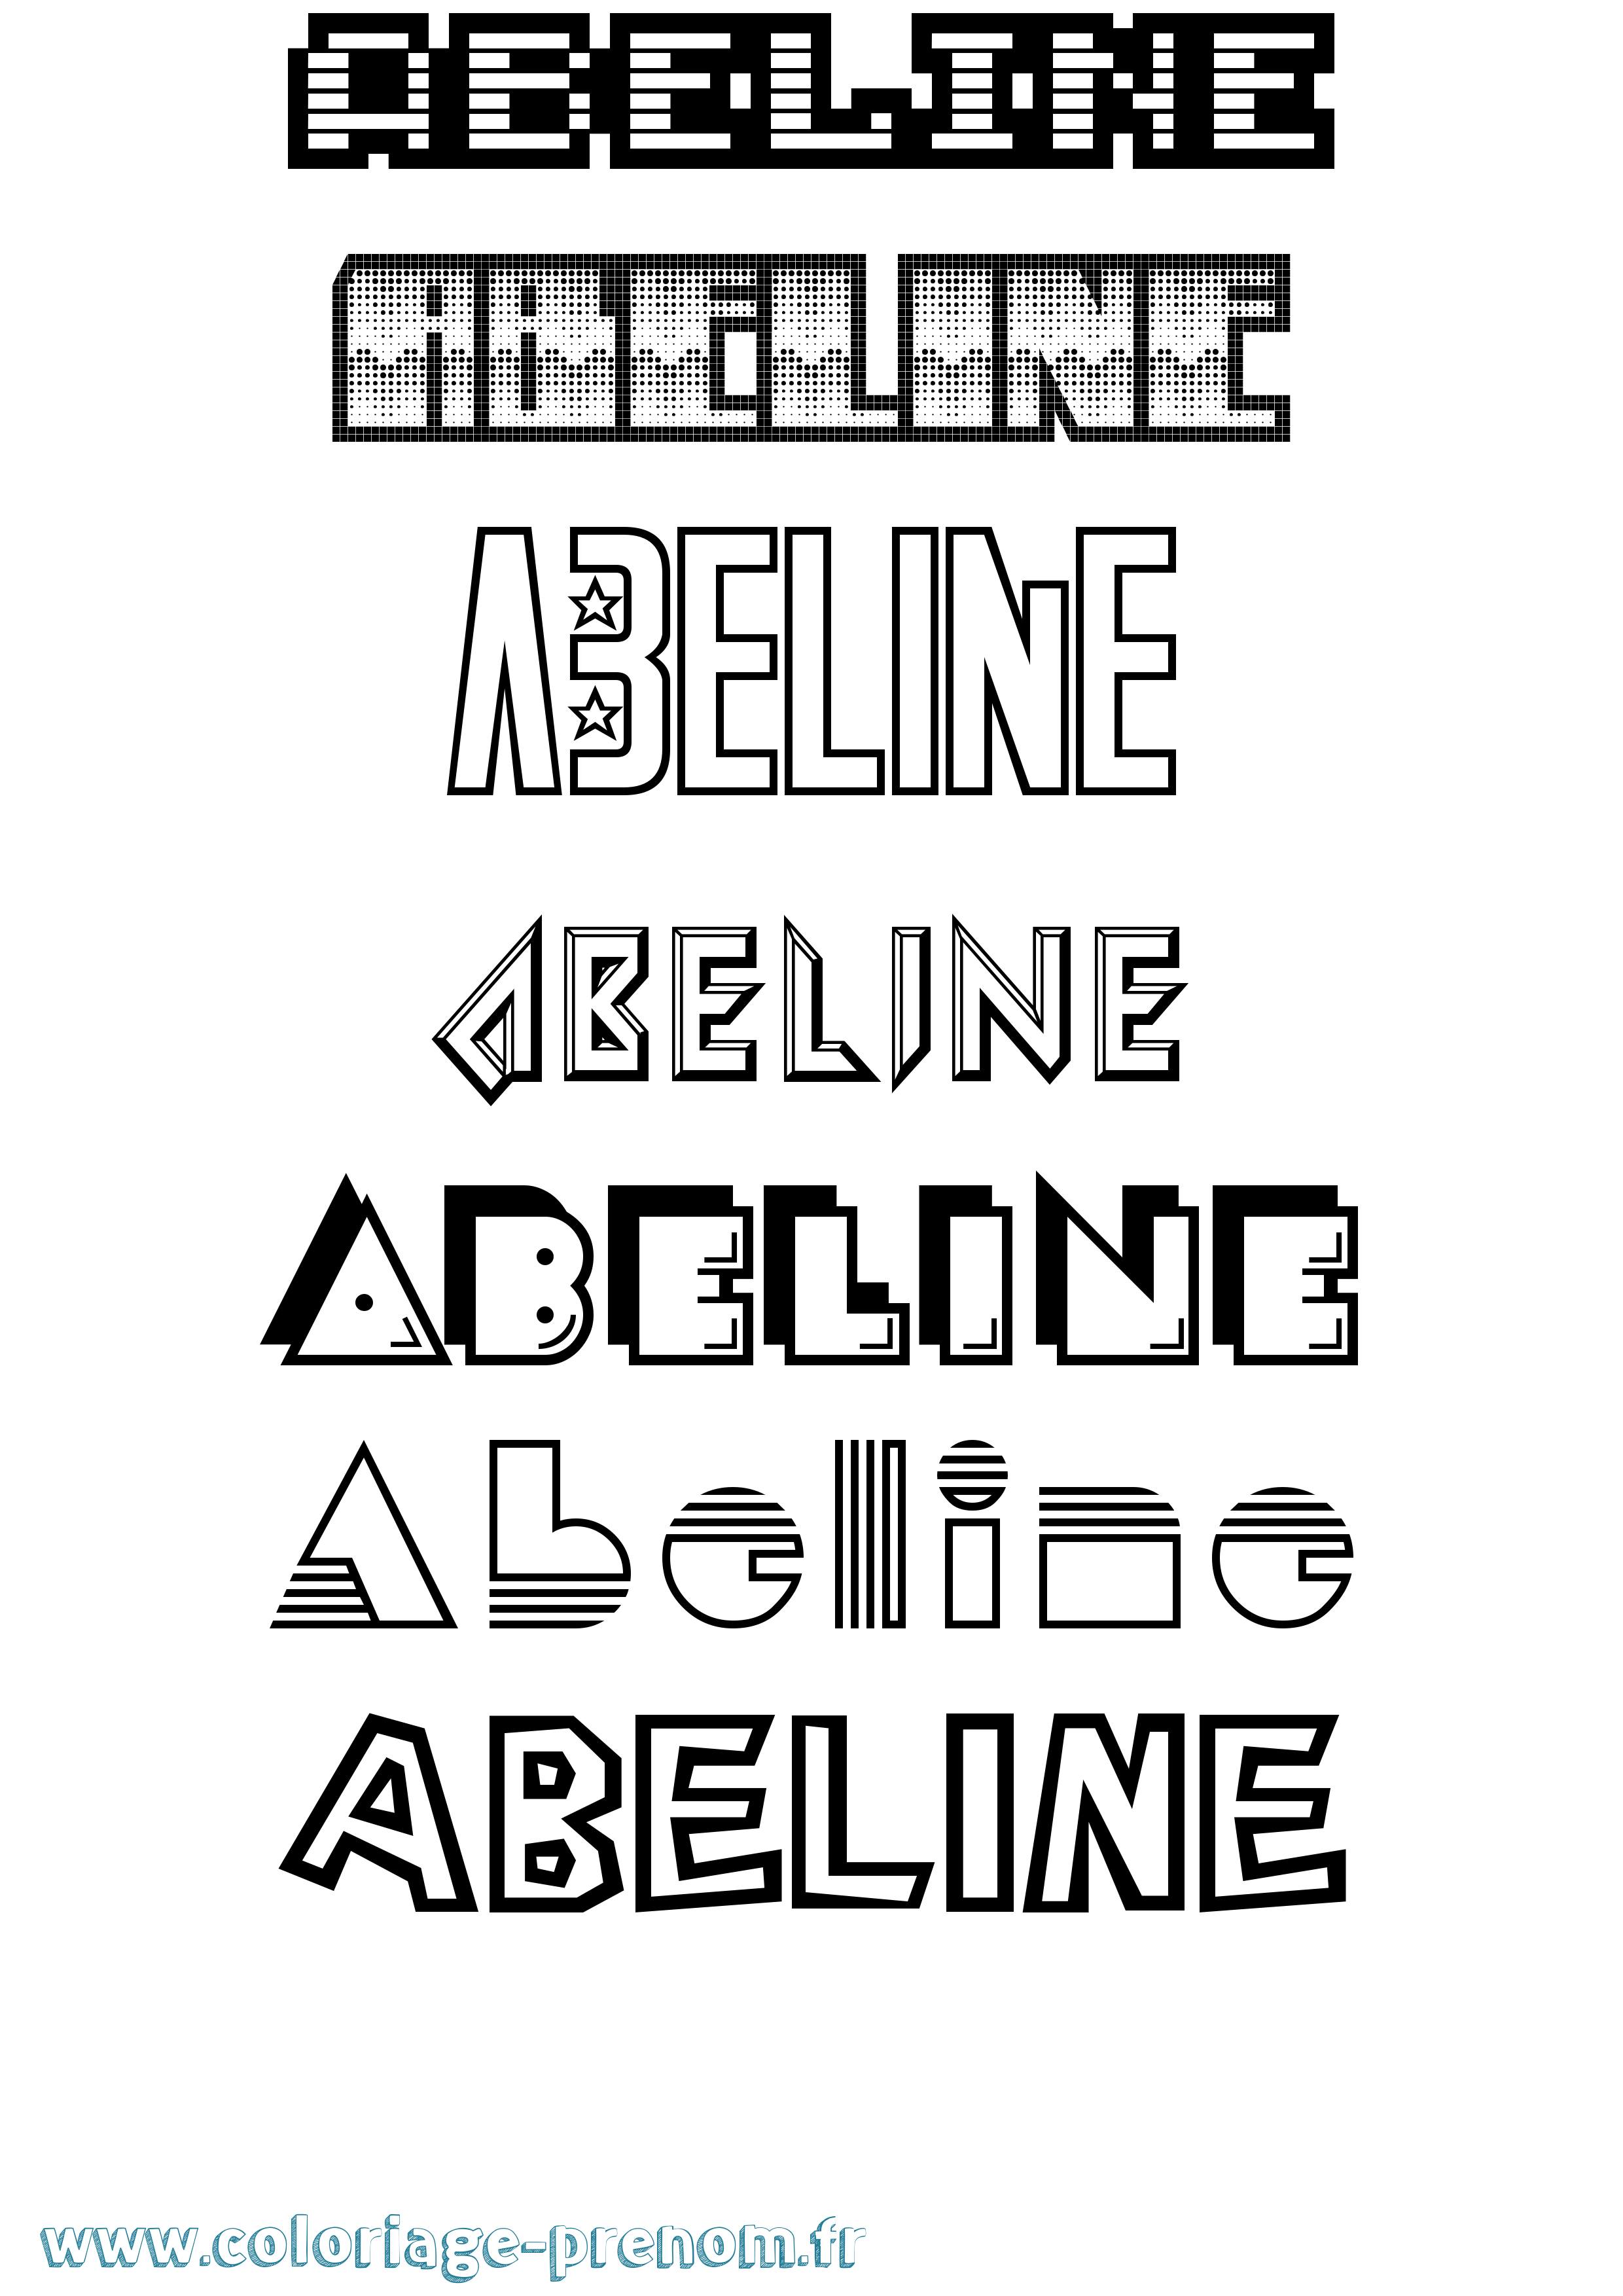 Coloriage prénom Abeline